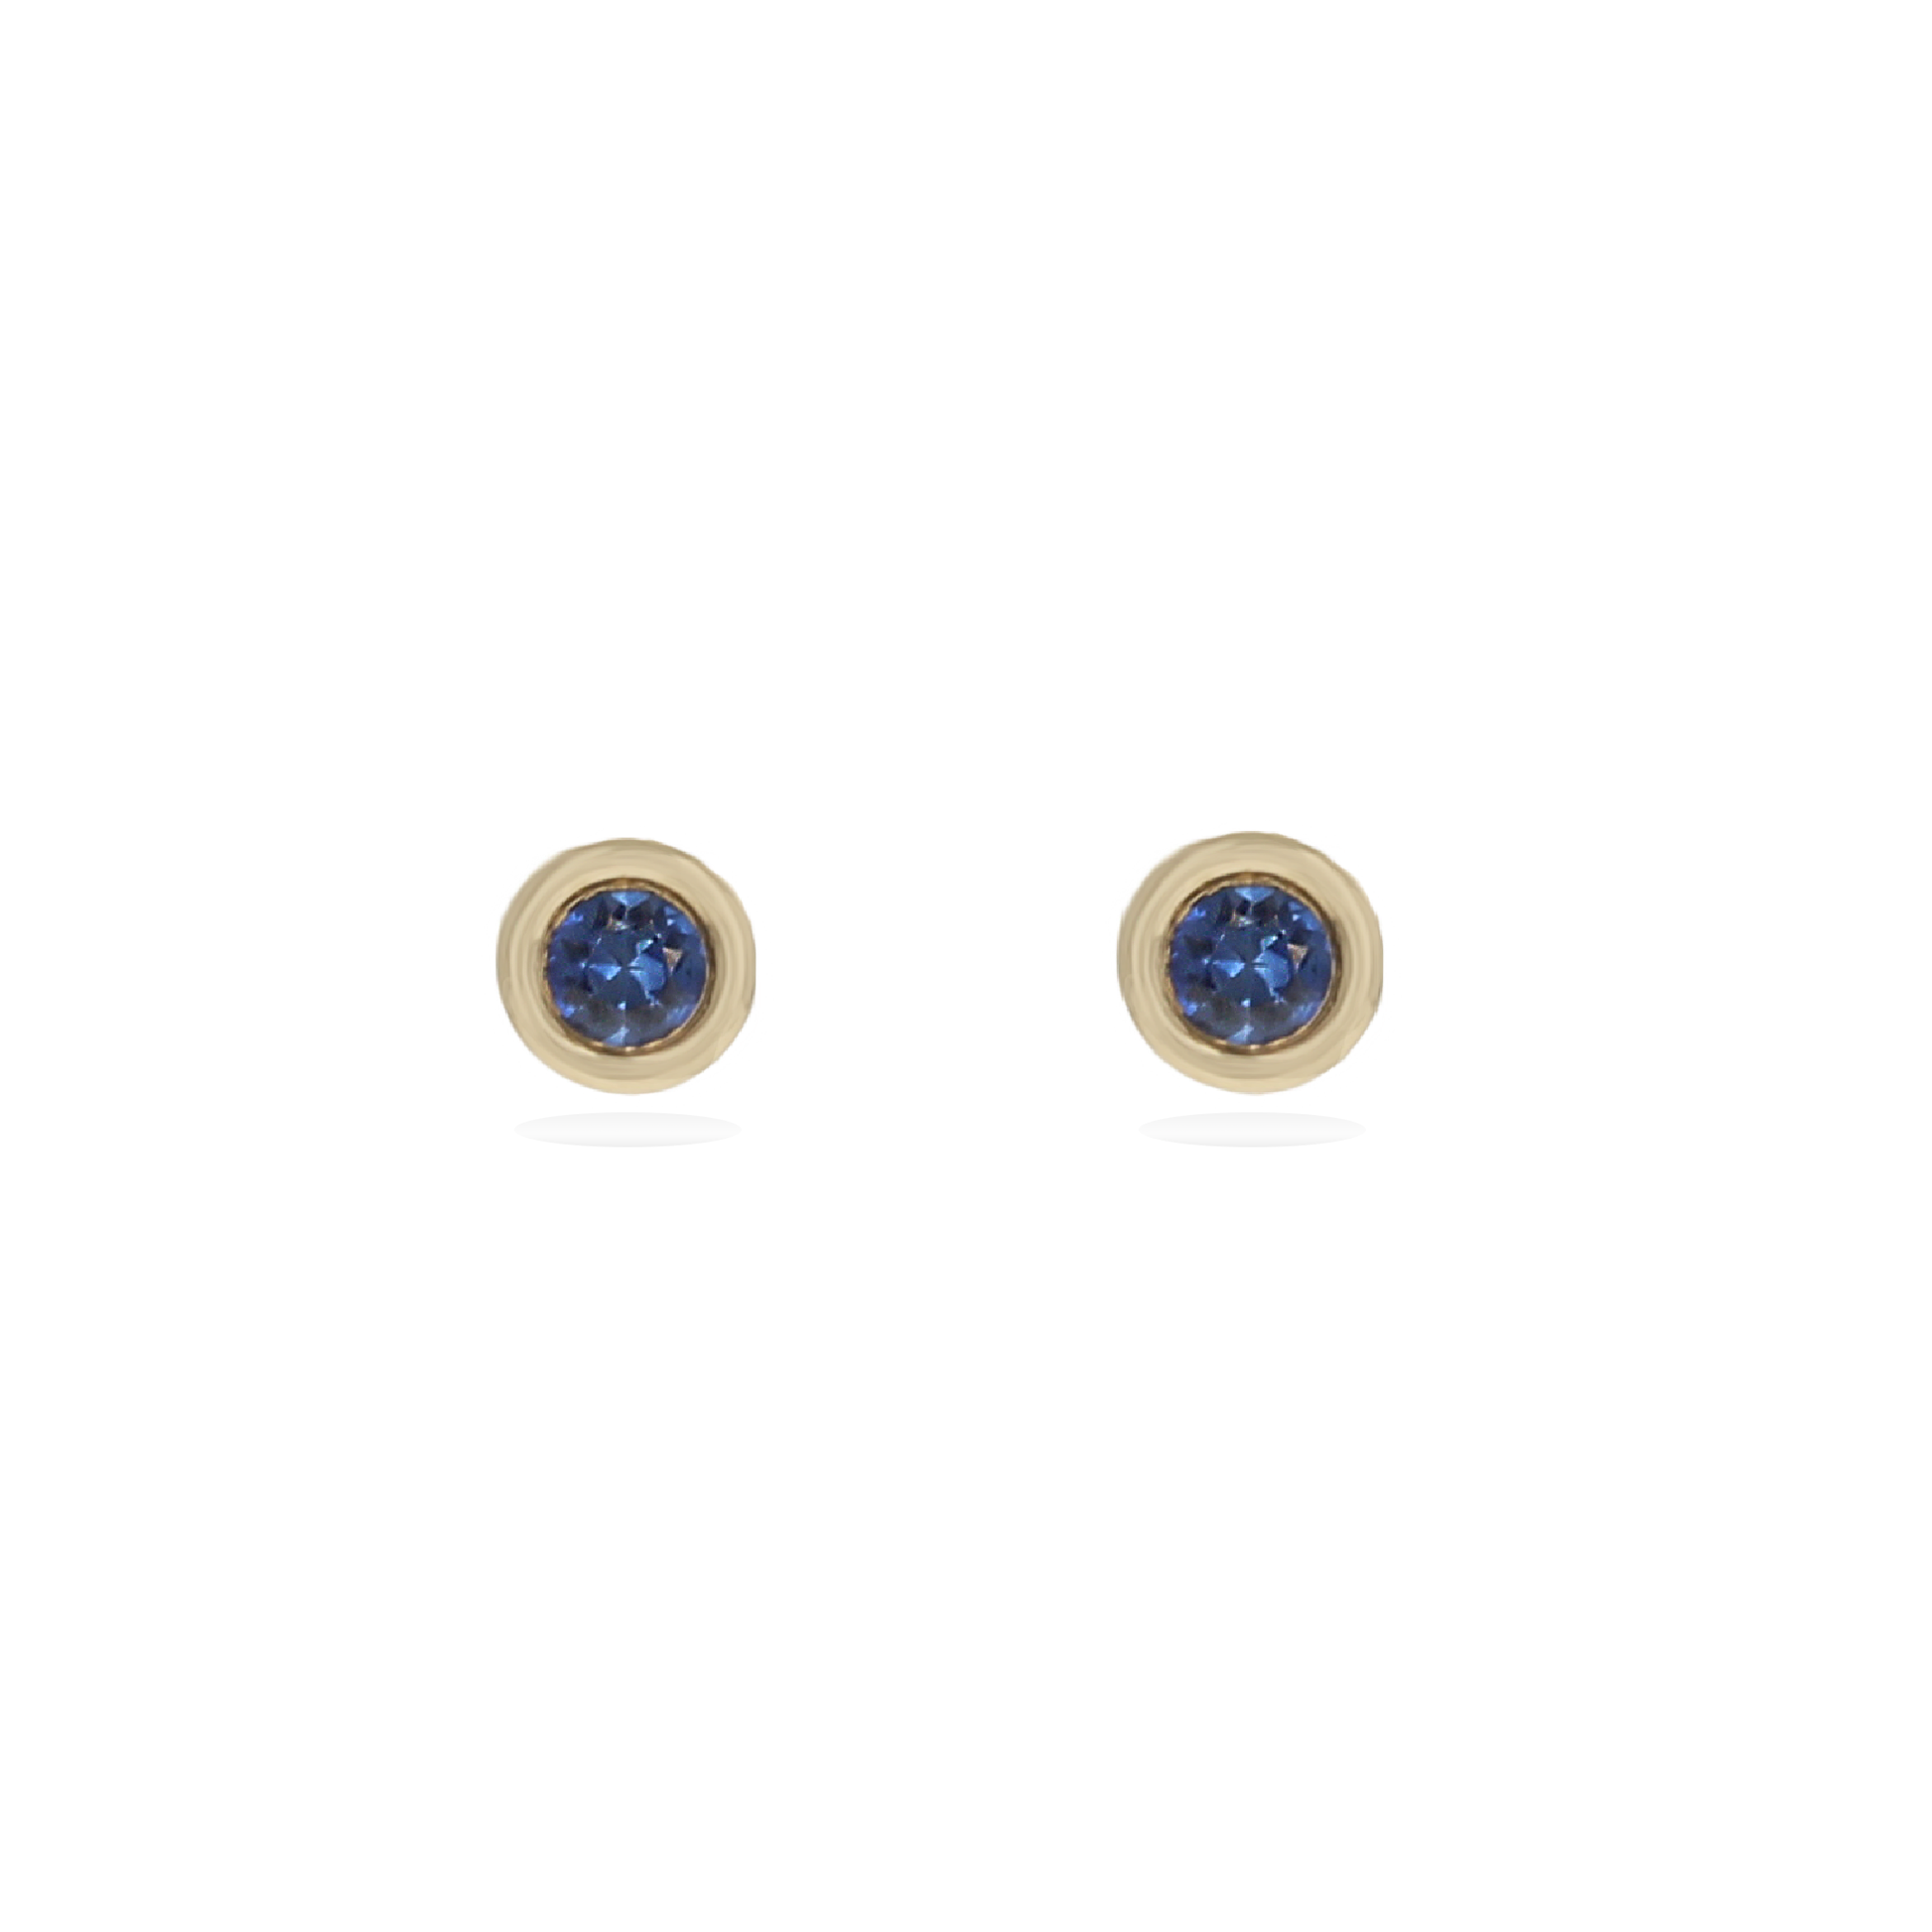 Tiny Blue Sapphire & 14k Gold Stud Earrings from Alexandra Marks Jewelry